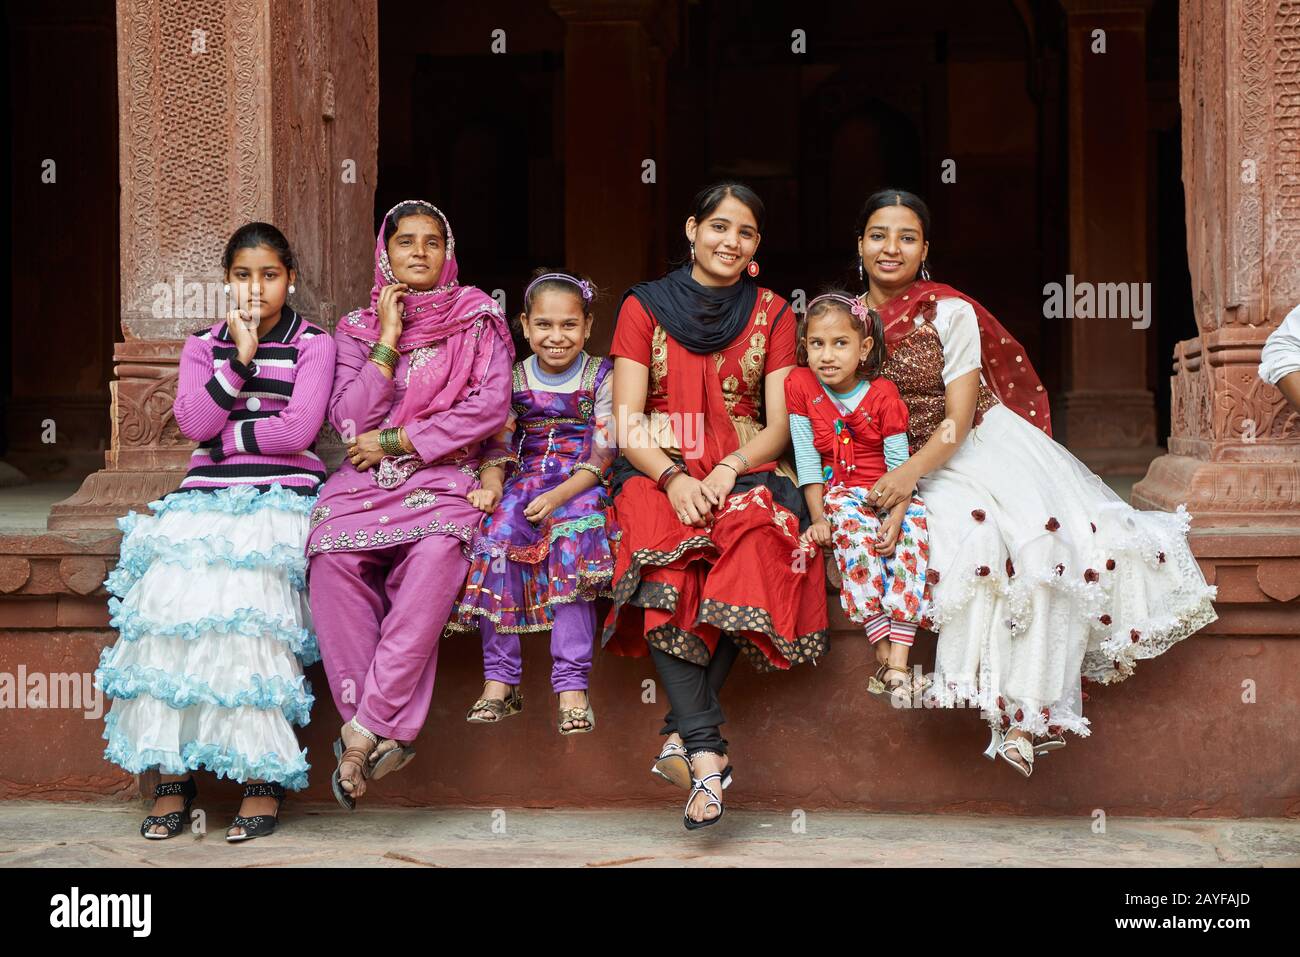 Group of traditionally dressed women and girls inside Agra Fort, Agra, Uttar Pradesh, India Stock Photo